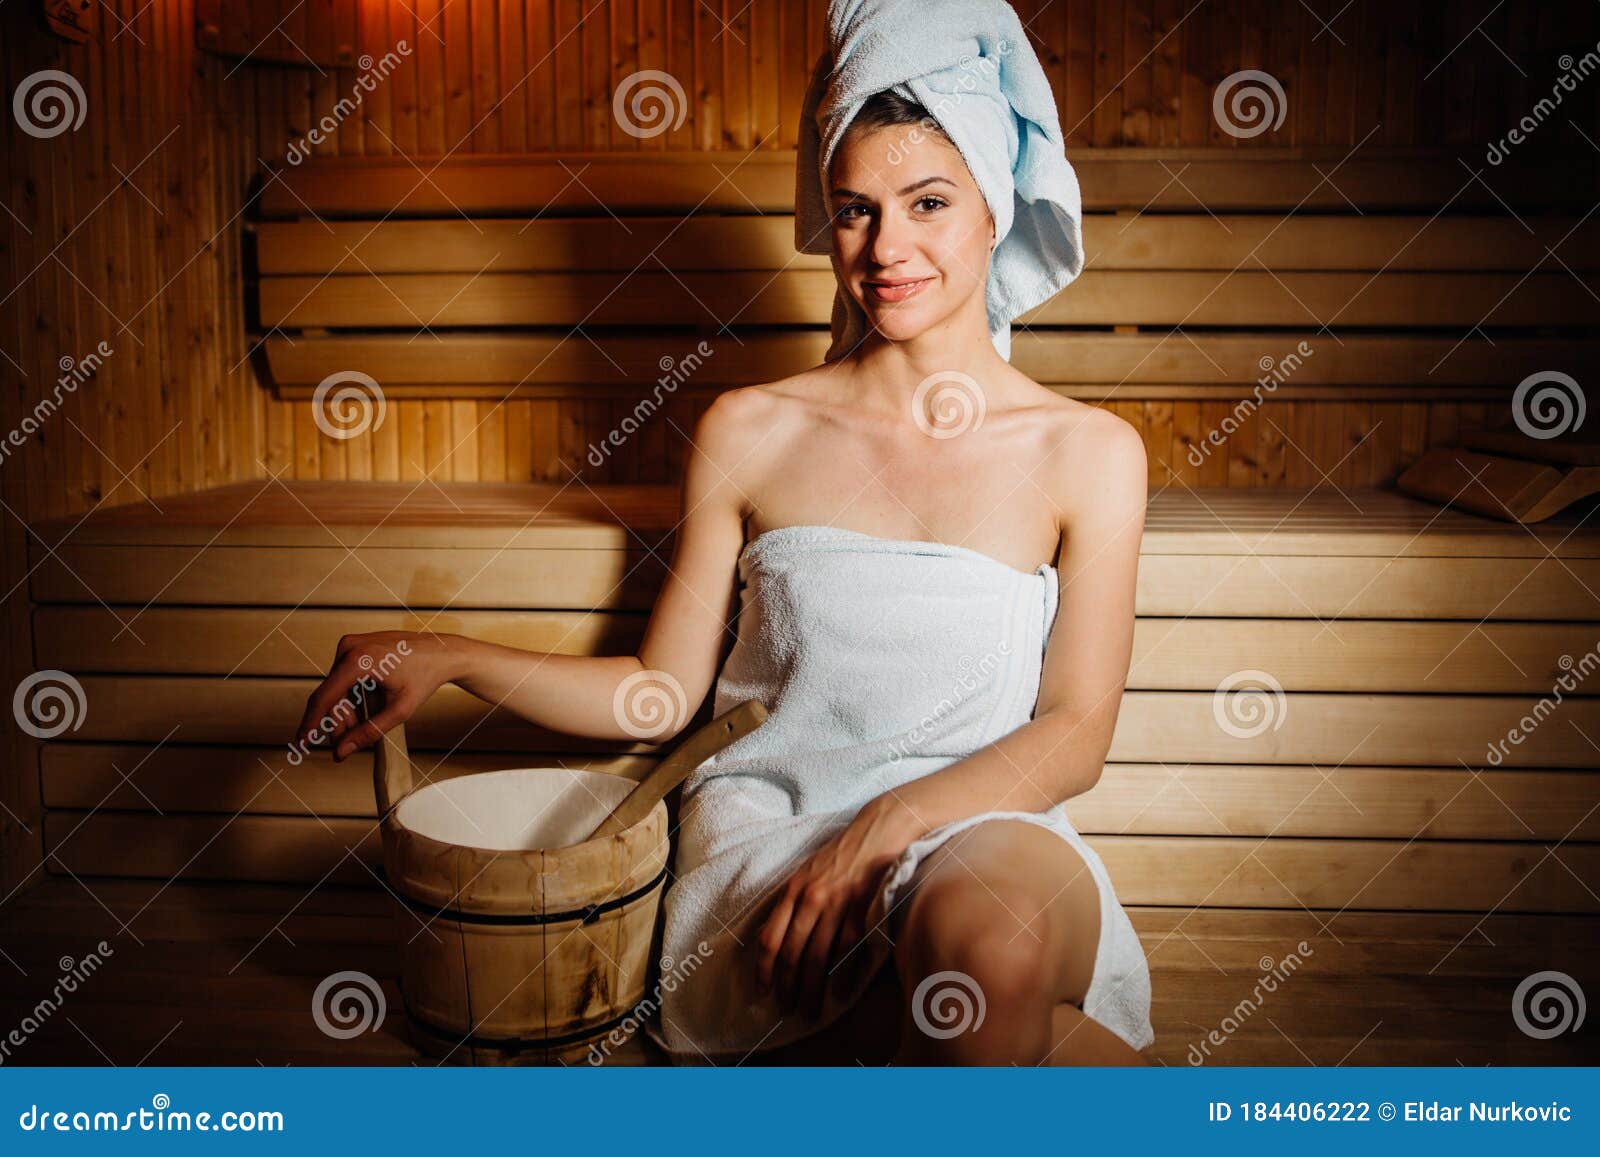 Vernauwd Bijwerken Een trouwe Young Woman Relaxing Inside Spa Sauna Room.Enjoying Relaxing Vacation Day  Doing Body Treatment in Luxury Resort Hotel Stock Photo - Image of heat,  healthy: 184406222